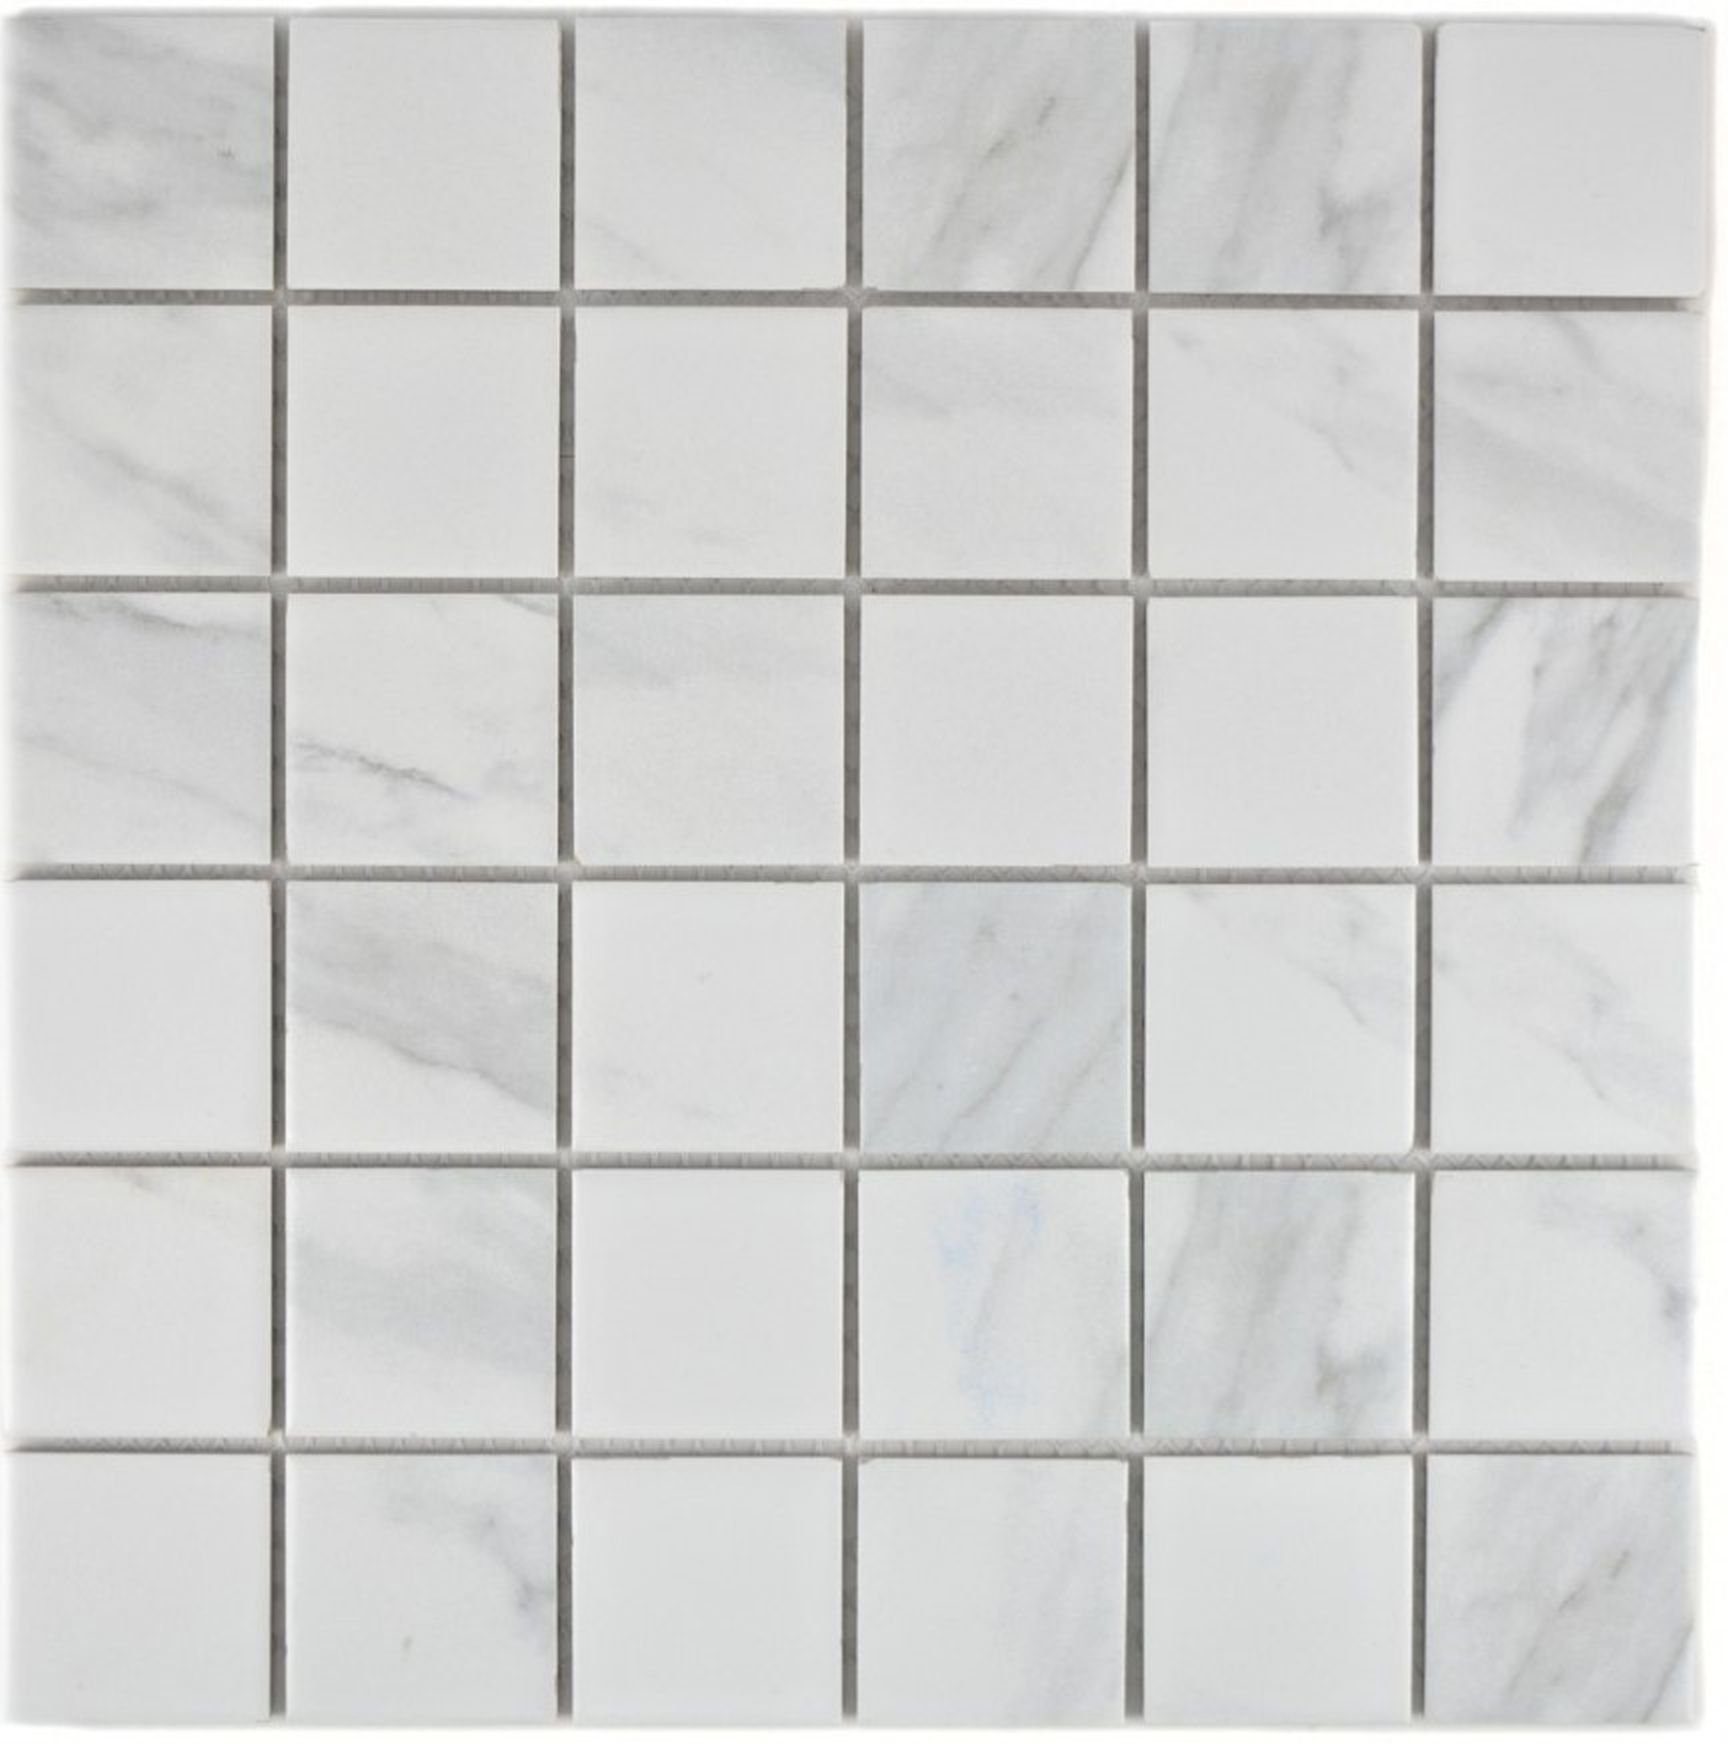 Mosani Mosaikfliesen Keramik Bad weiß Carrara Küche Fliese Fliesenspiegel grau Mosaik